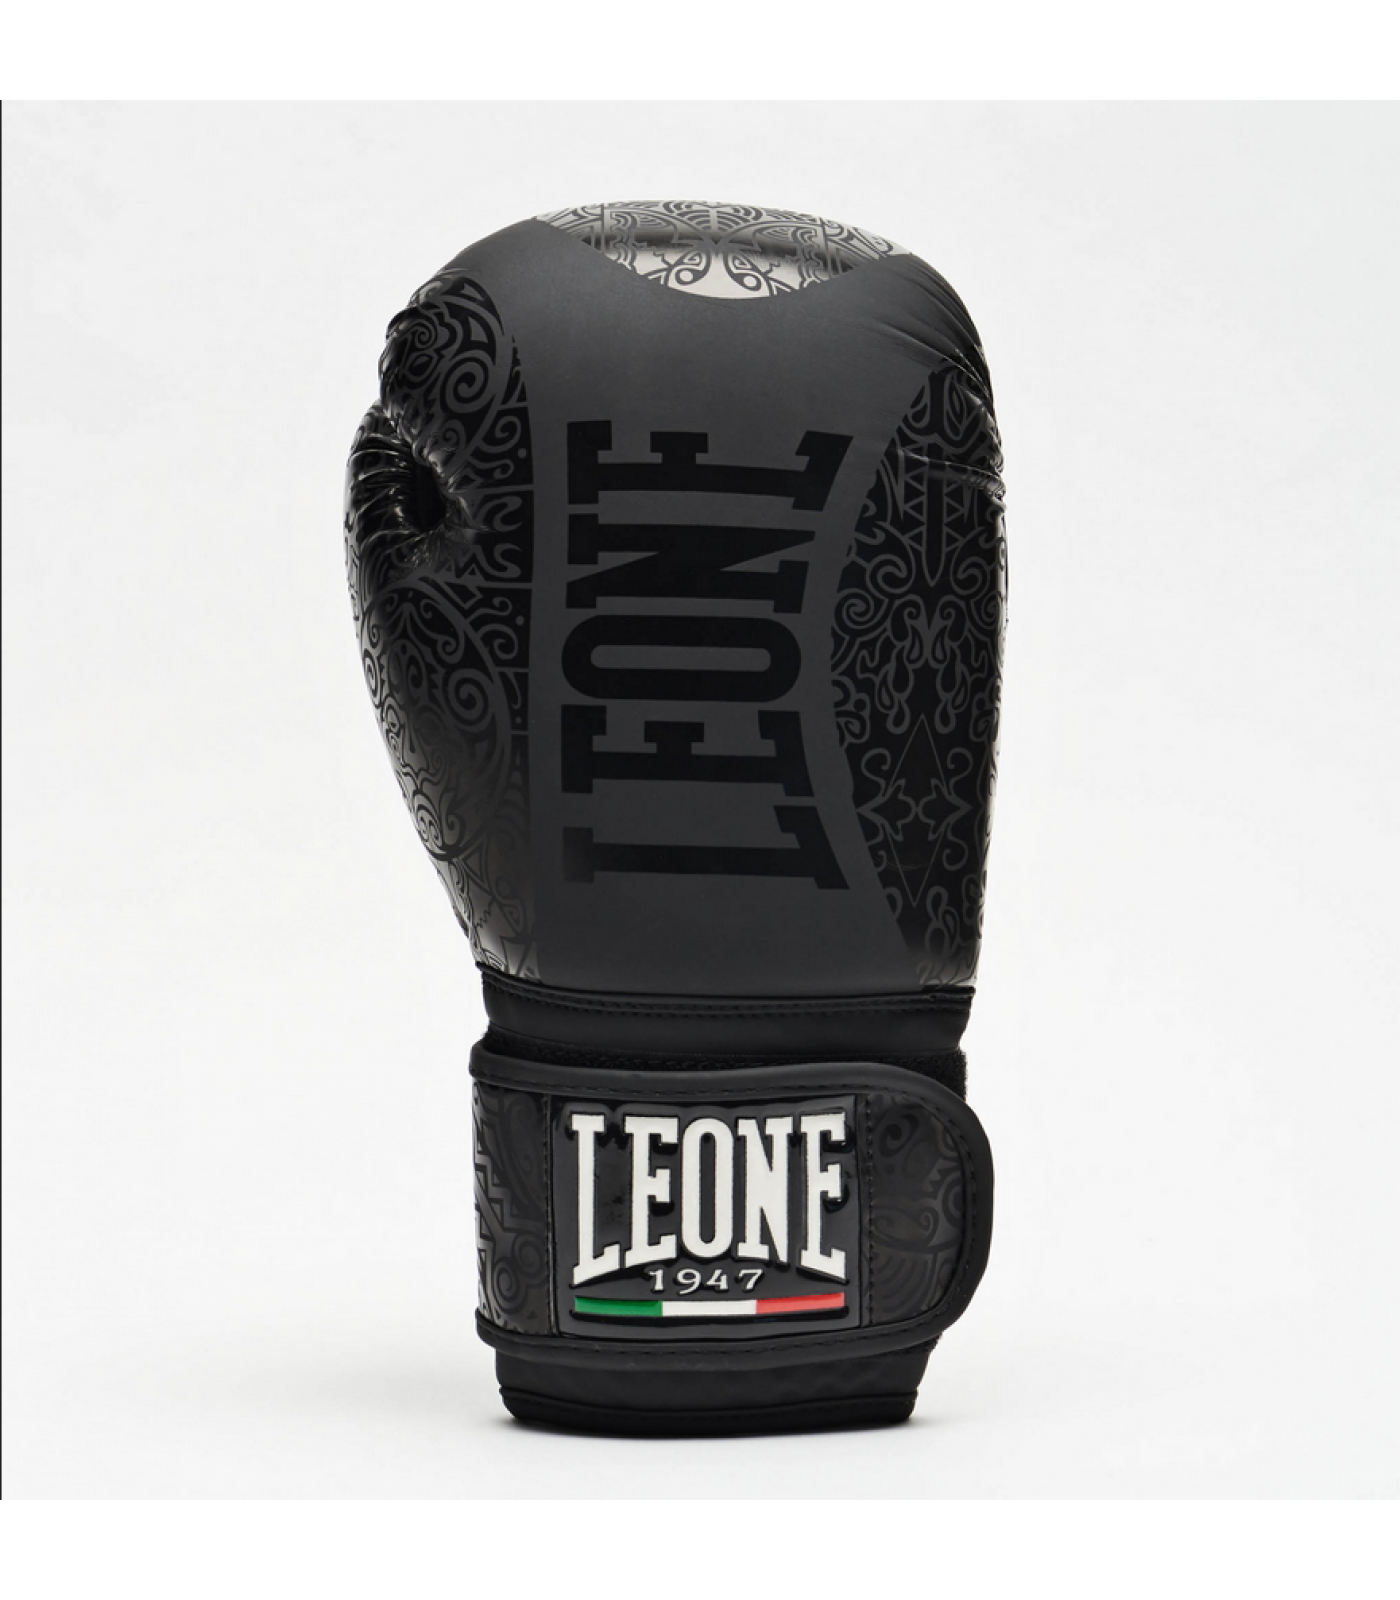 Leone - Maori Boxing Gloves - Black / Black - GN070